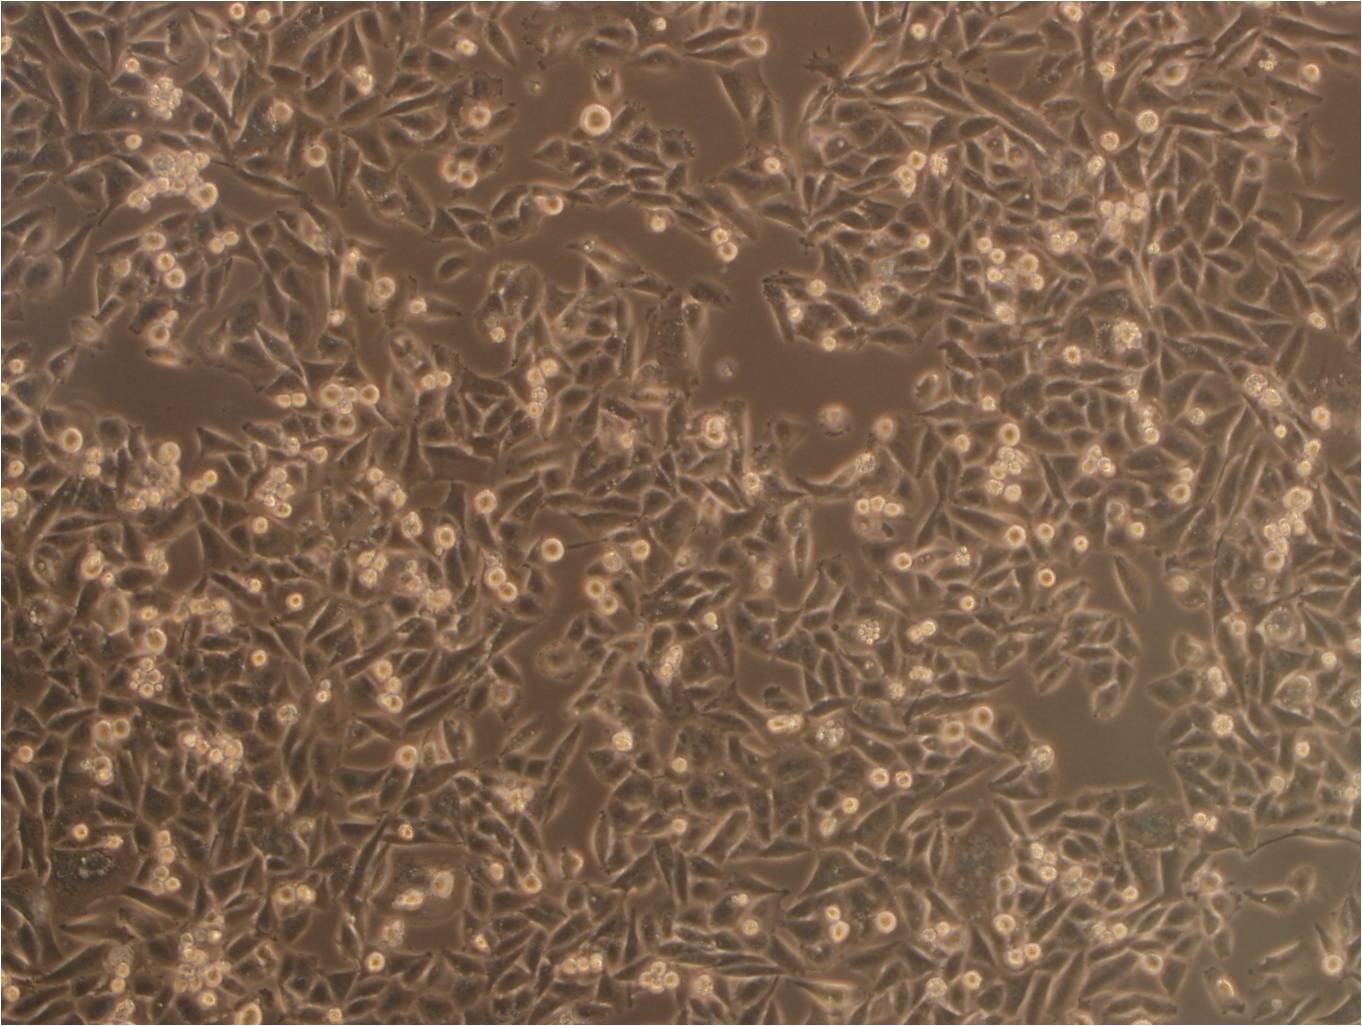 UMR-106 Cells|大鼠骨肉瘤细胞系,UMR-106 Cells